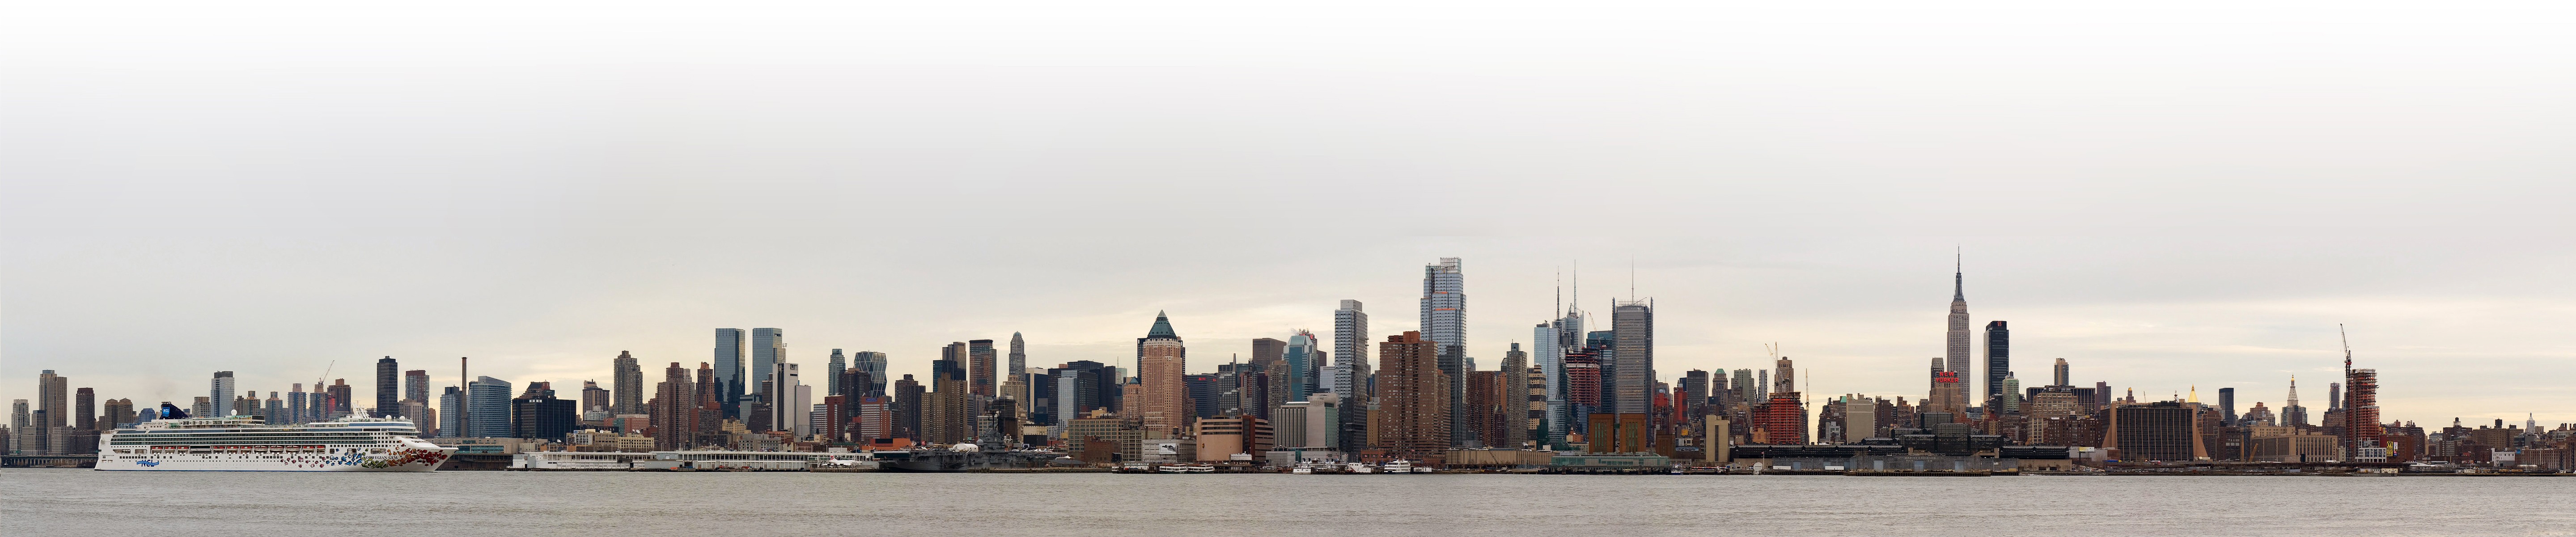 General 5760x1200 New York City triple screen wide angle Manhattan cityscape metropolis  panorama skyline USA